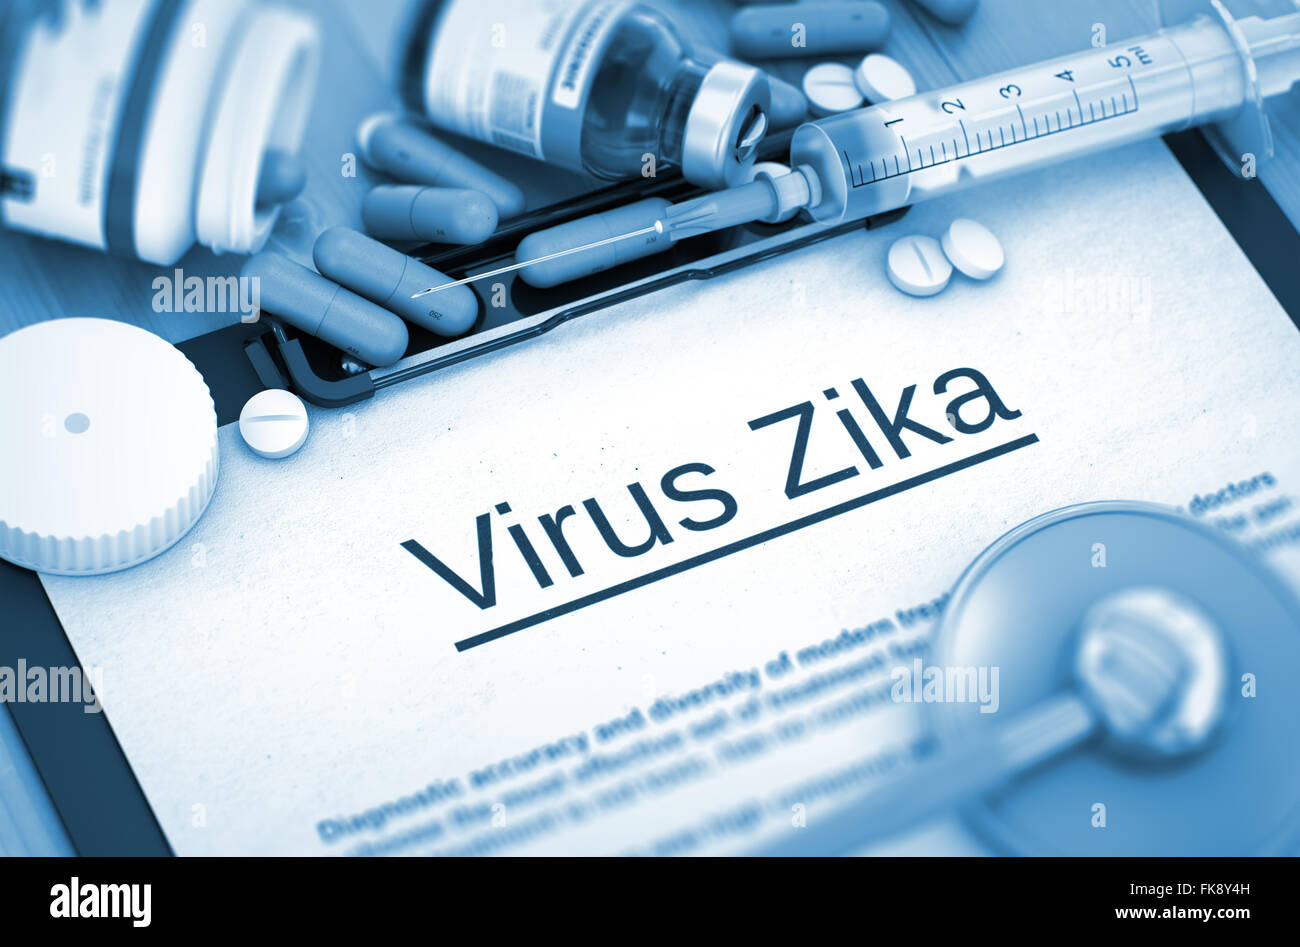 Virus Zika Diagnosis. Medical Concept. Stock Photo